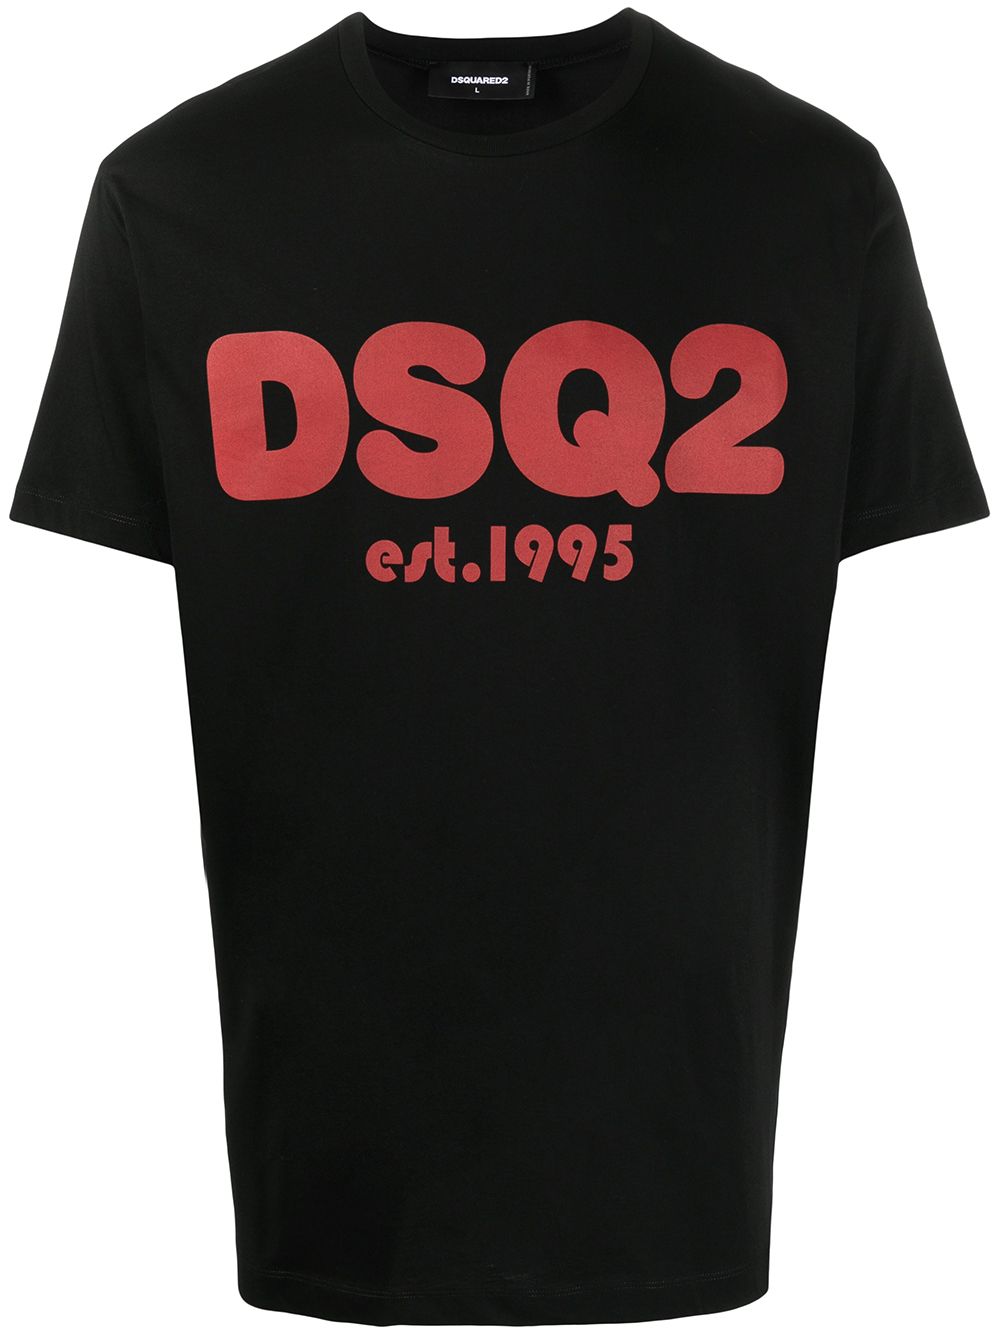 DSQUARED2 logo DSQ2